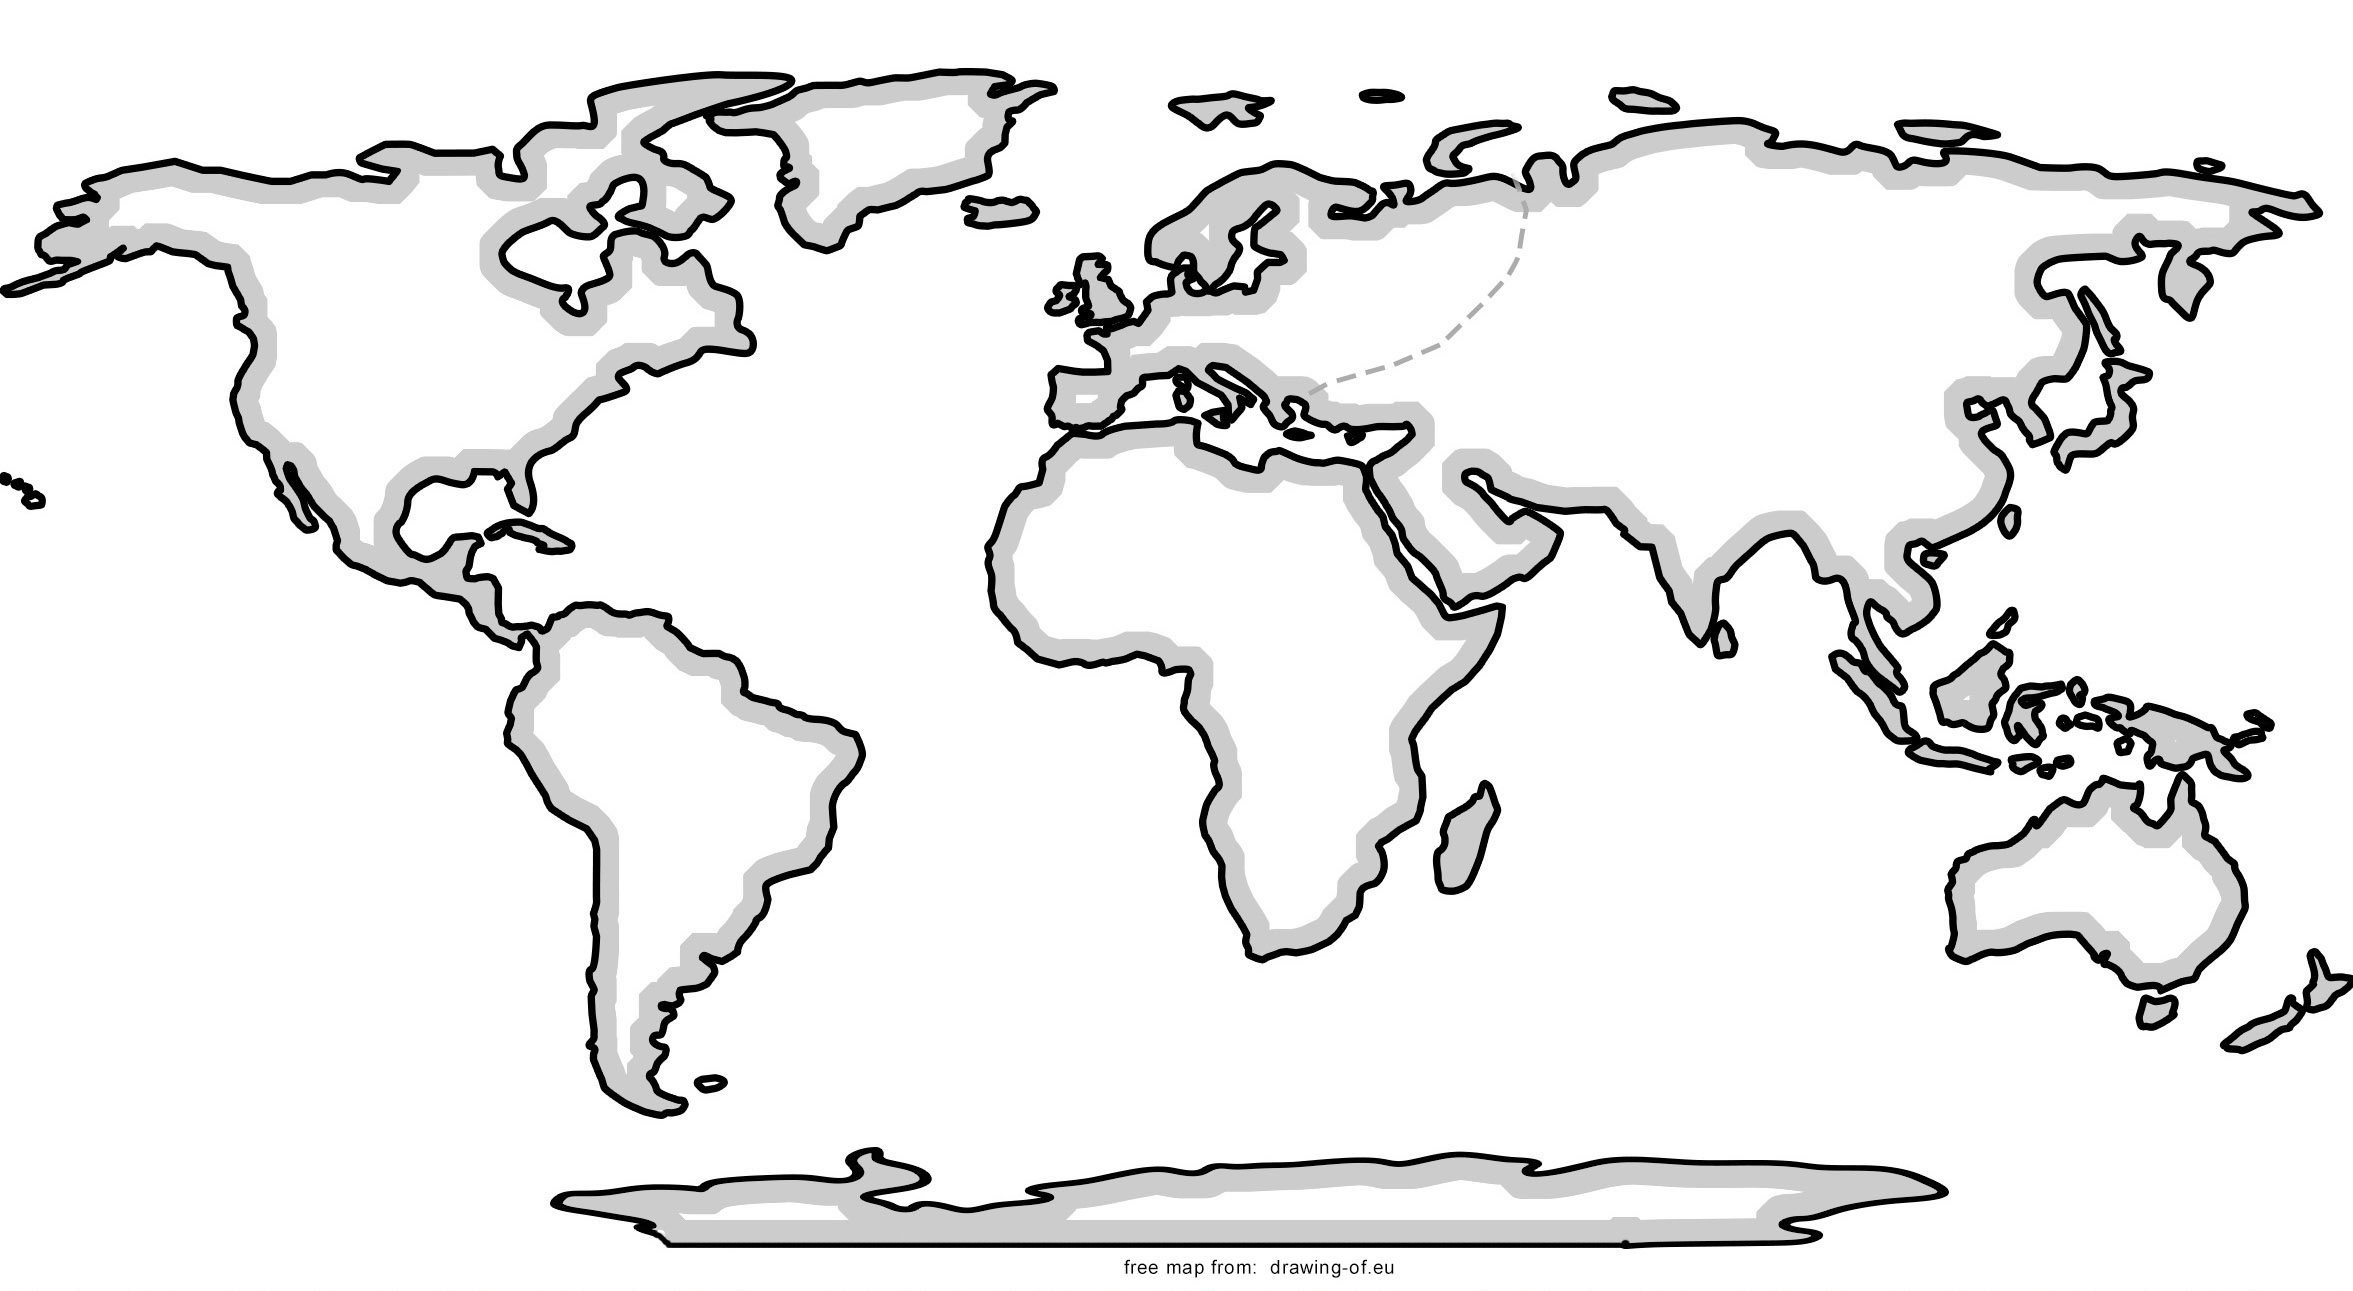 World map for printing drawingof.eu